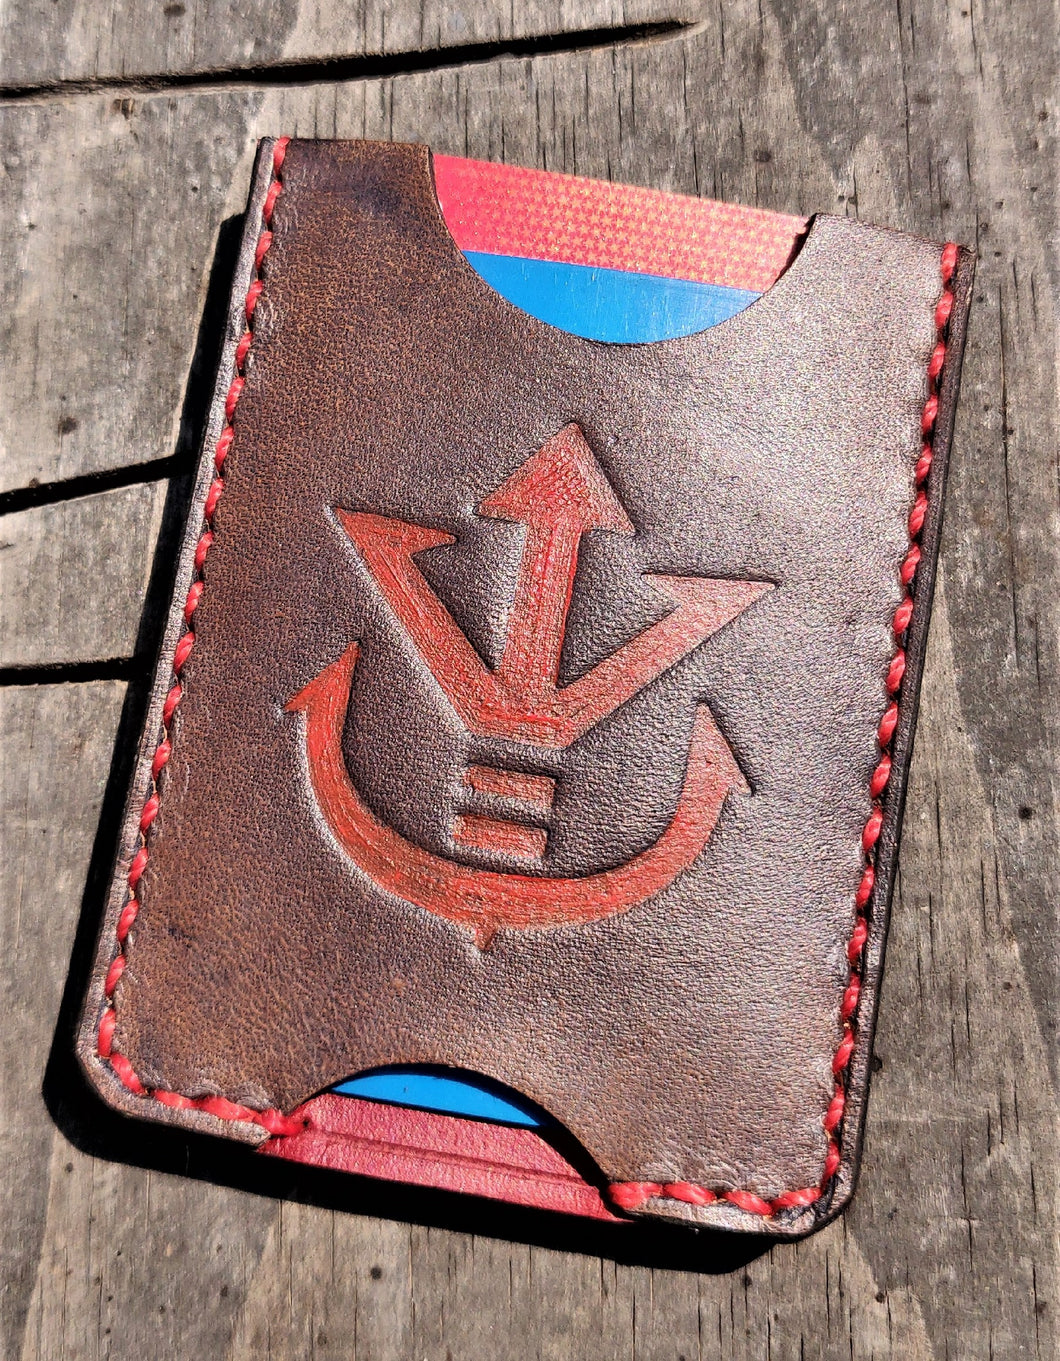 Handmade Leather Minimalist Wallet MINUS Red Gray Dragon Ball Saiyan Royal Crest Vegeta